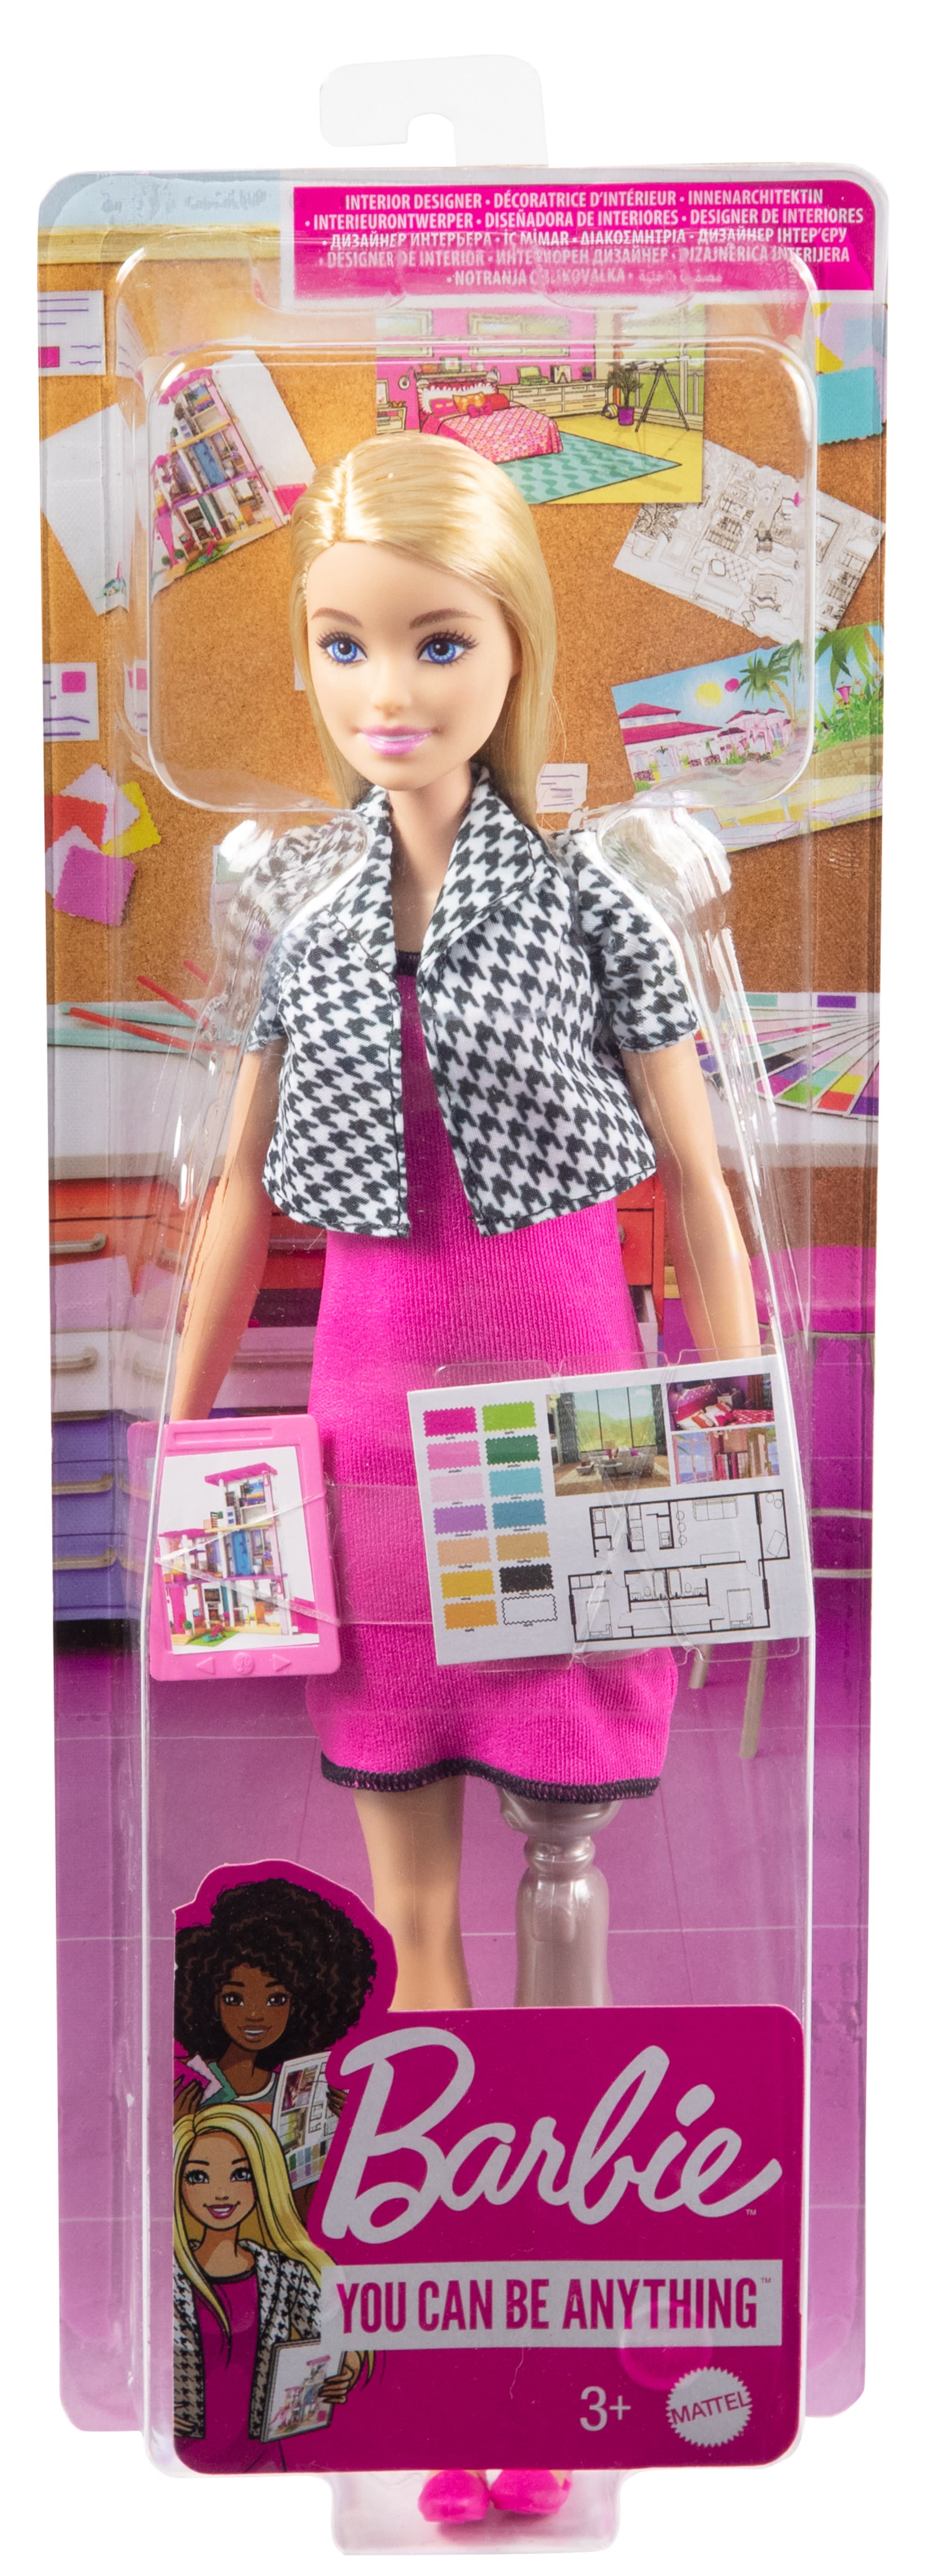 Barbie Interior Designer Doll | Mattel